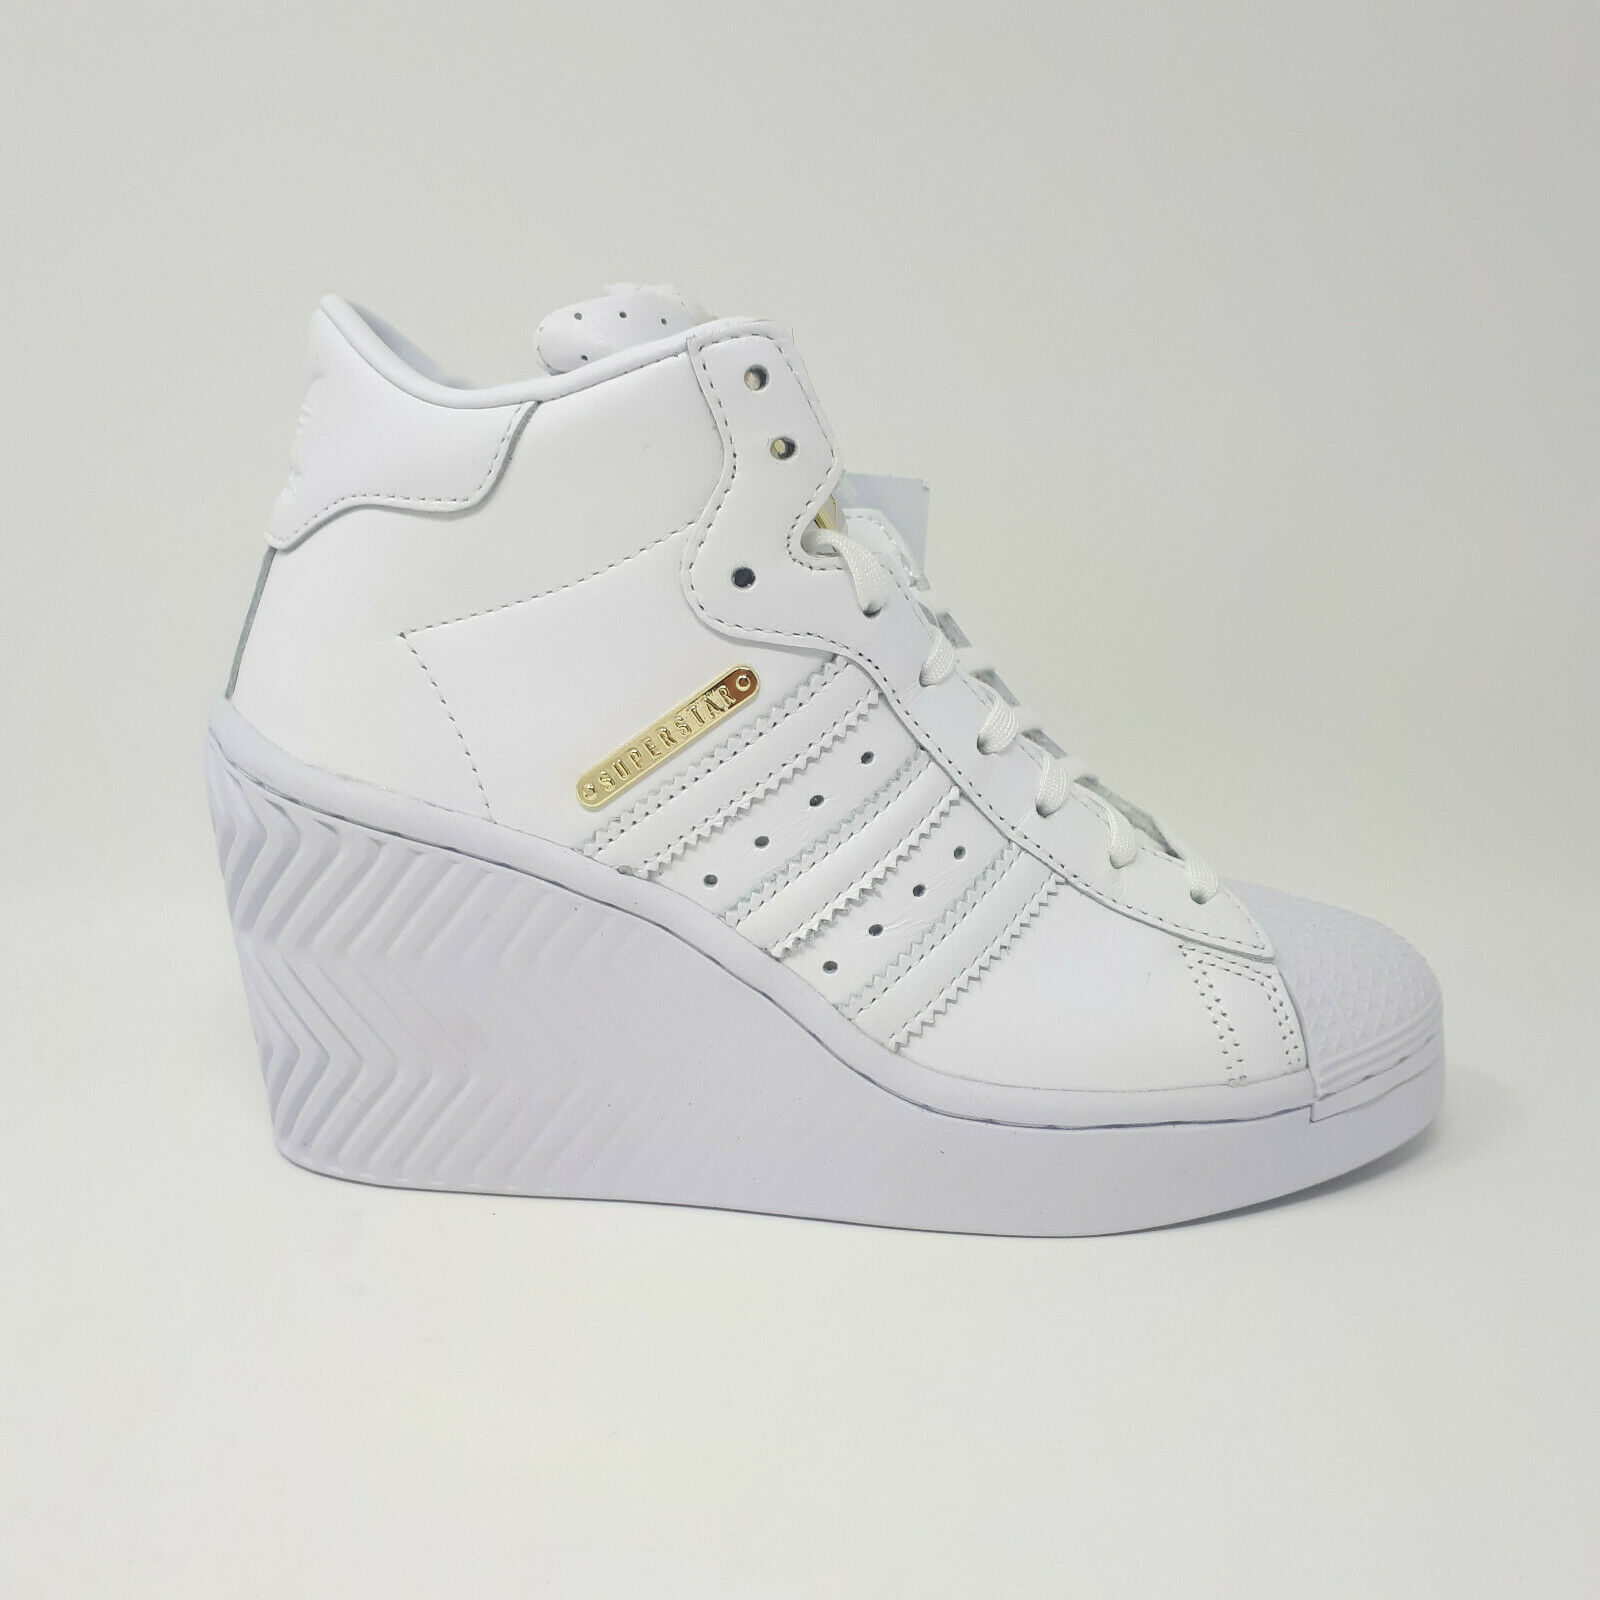 Adidas Superstar Ellure Women's Shoe Sneaker FW3198 Casual Wedge Heel Size 6 US